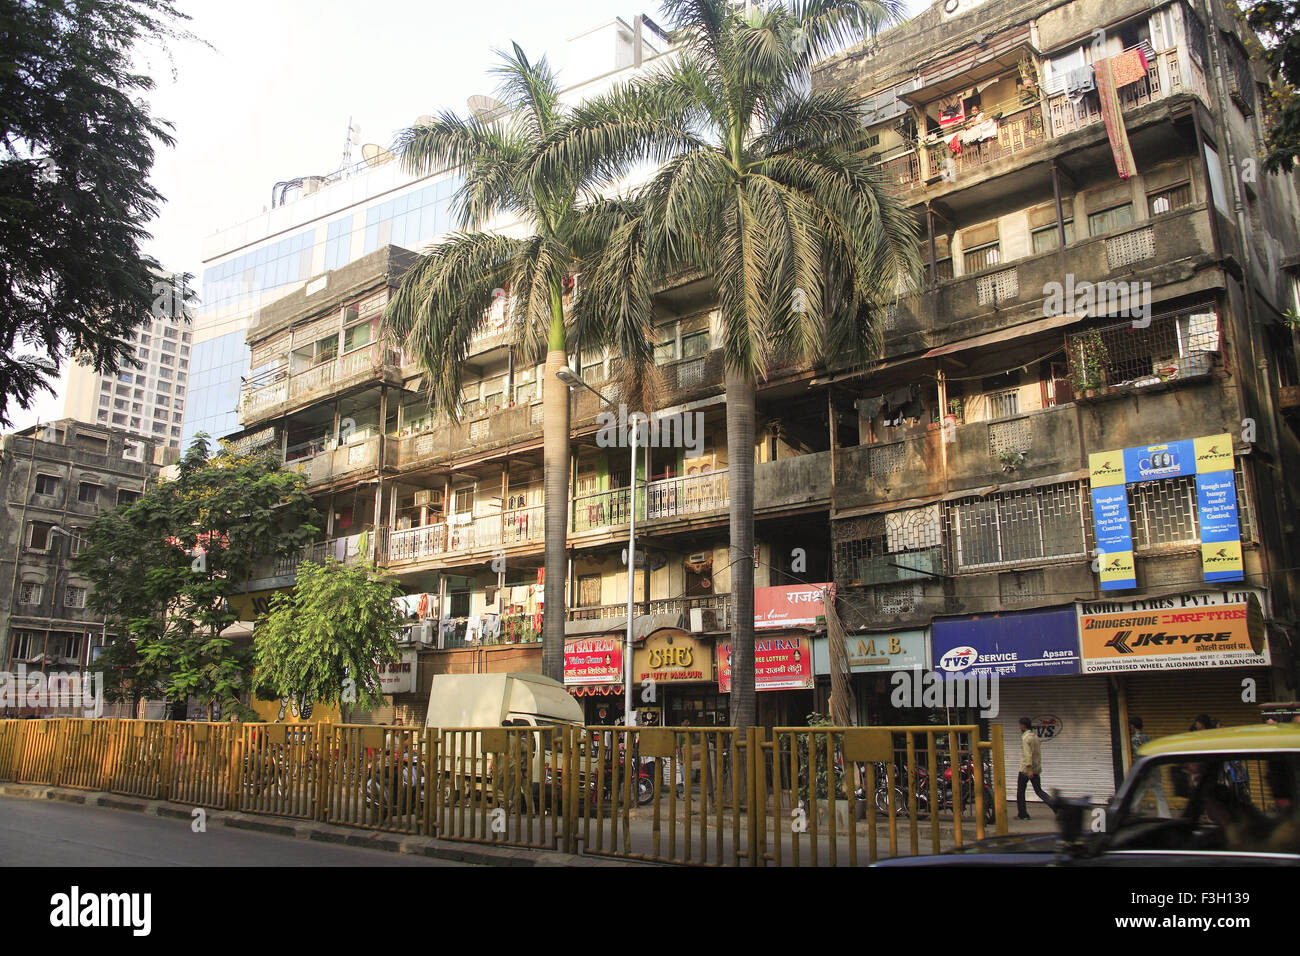 Old building ; chawl eashak manzil ; Grant road ; Bombay now Mumbai ; Maharashtra ; India Stock Photo